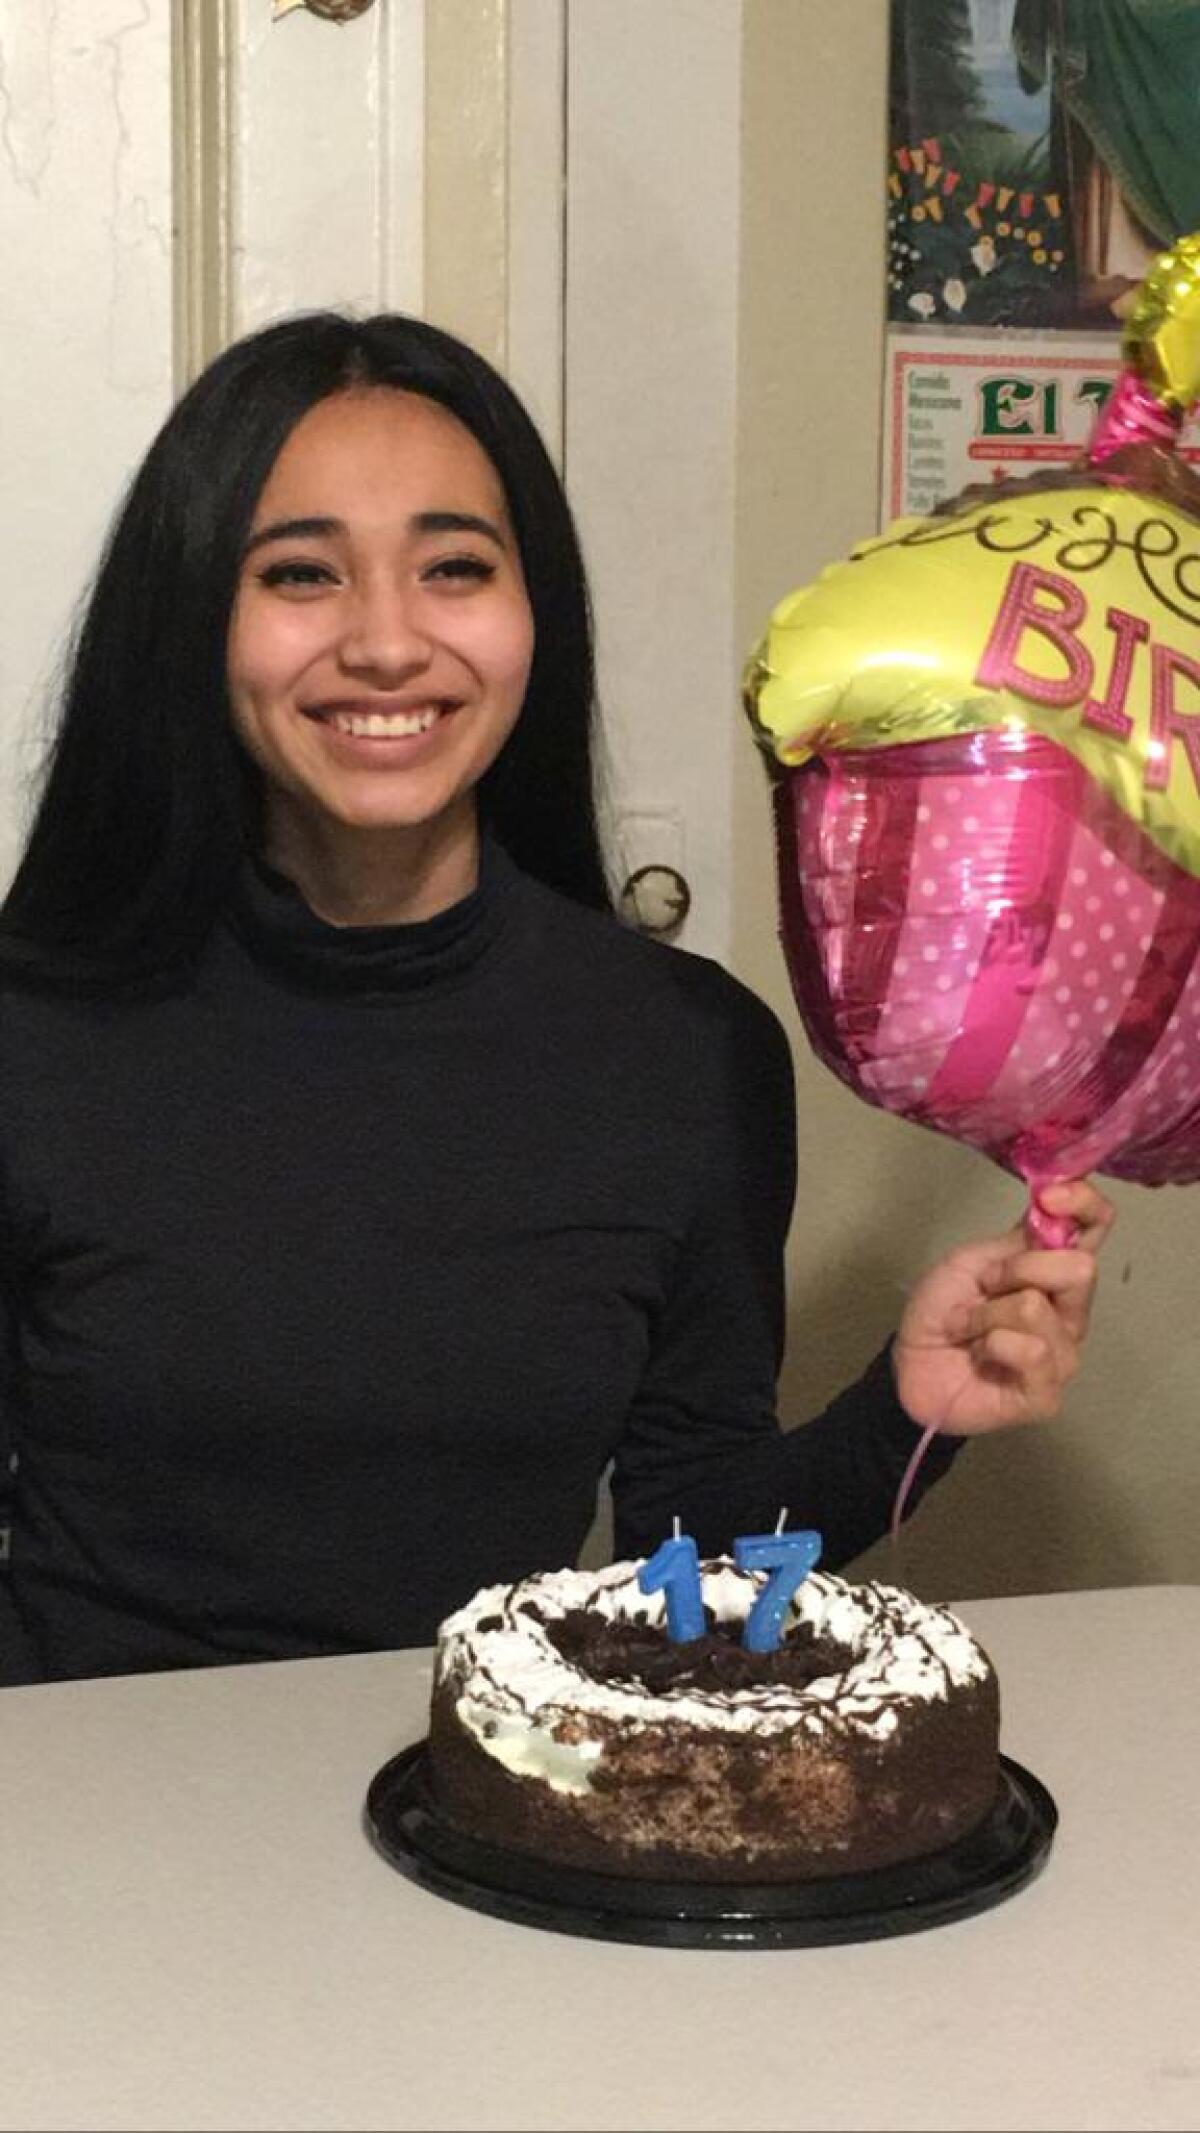 Cielo Echegoyén a student at Santa Ana High School, at her birthday celebration in February 2020.